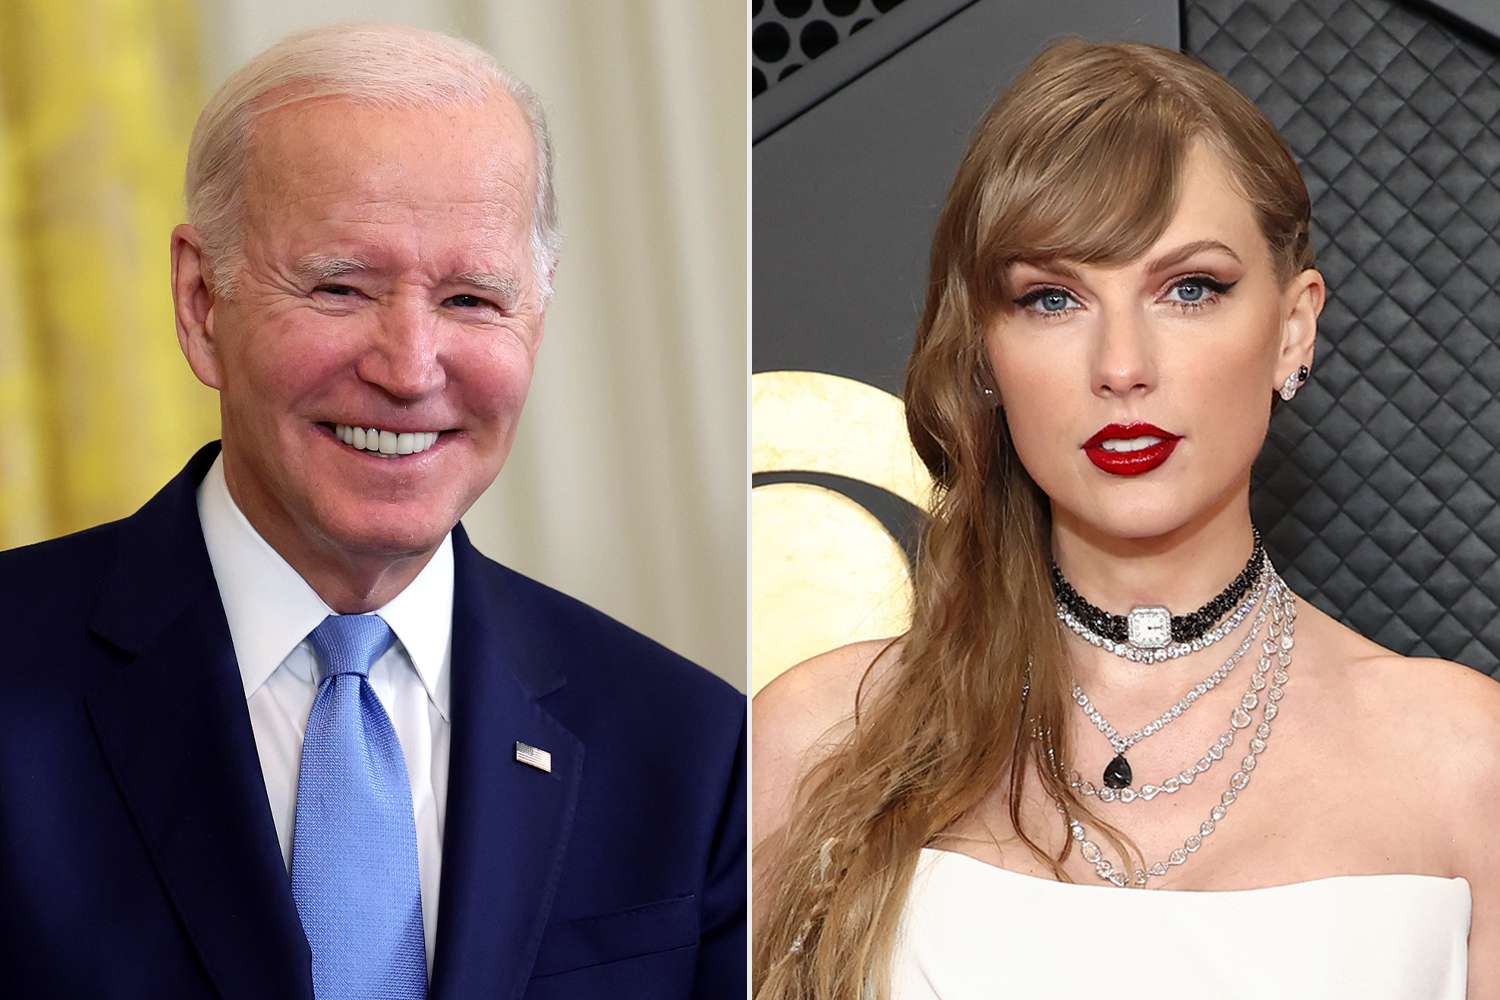 "Taylor Swift's 2024 Endorsement: Biden Keeps Mum, Calling It 'Classified'"